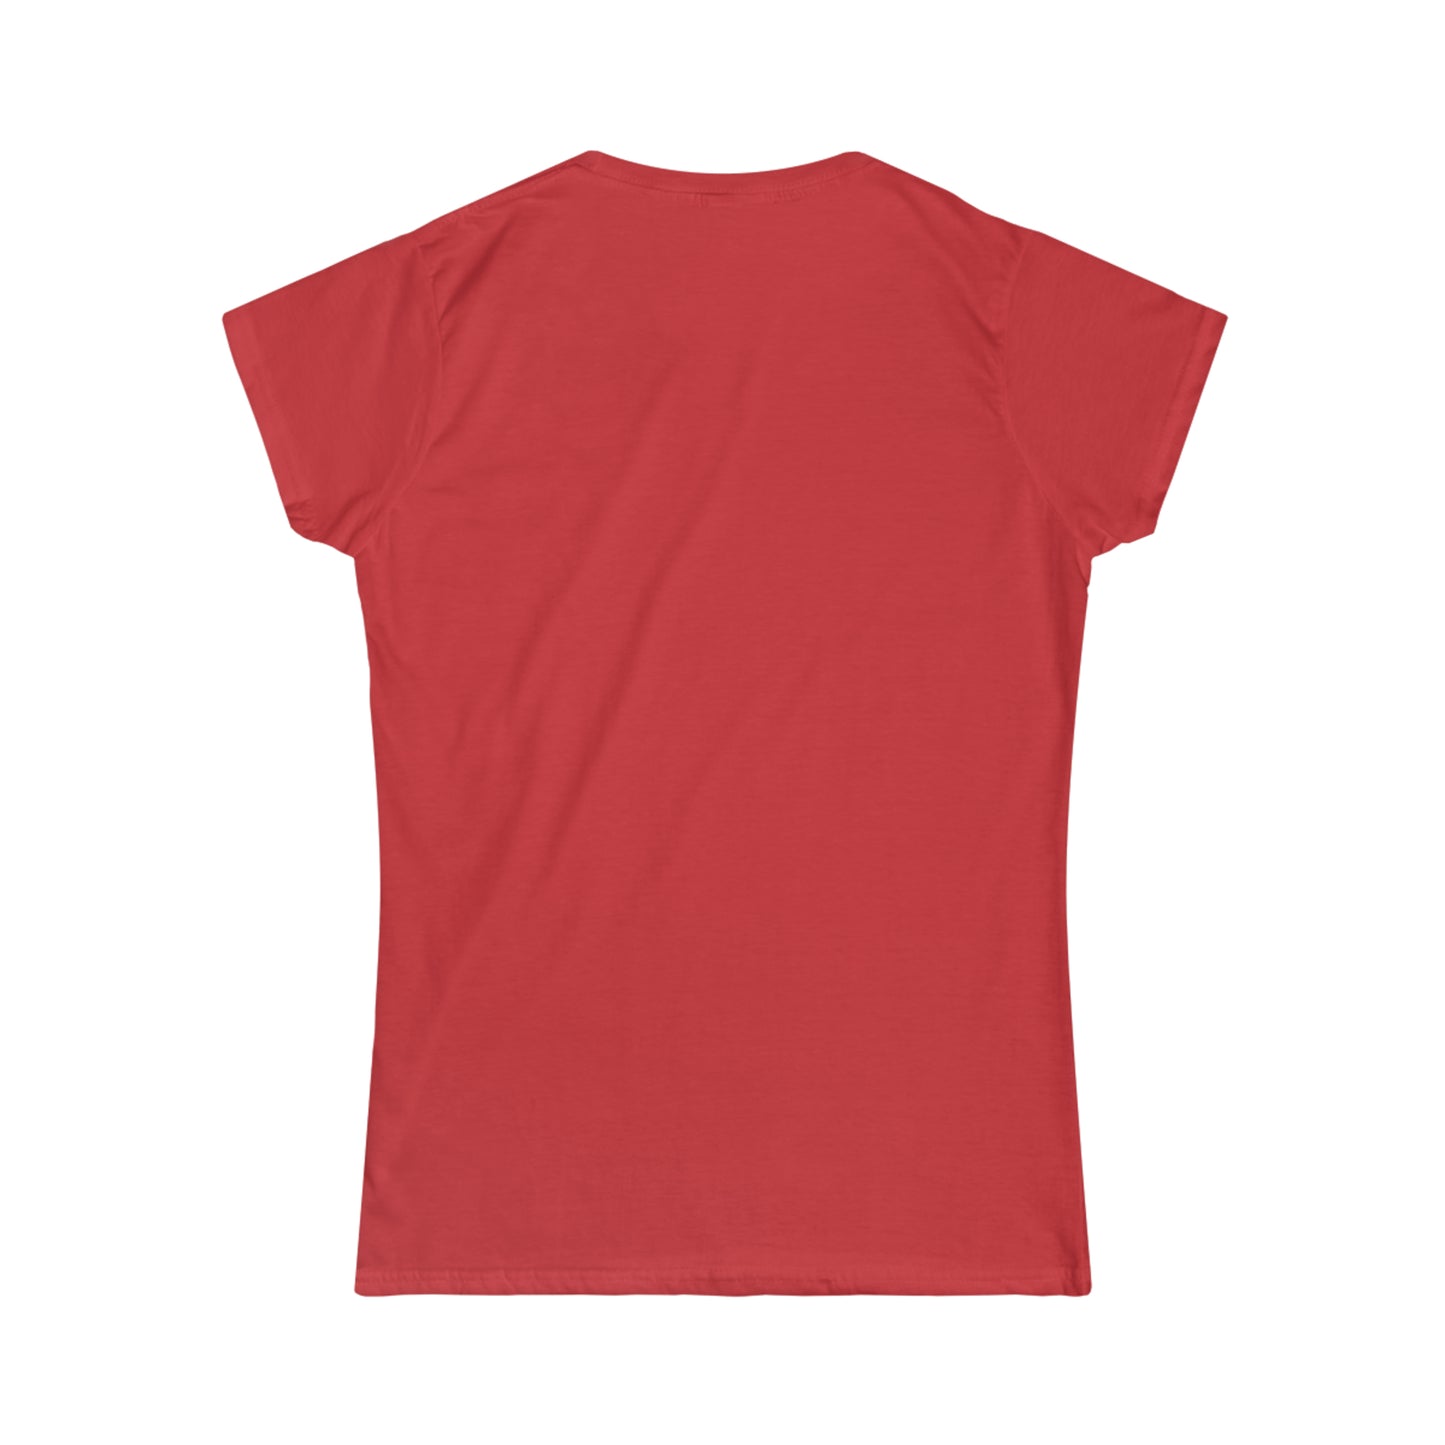 Aqui hay tomate - Camiseta de mujer - Women's Softstyle Tee